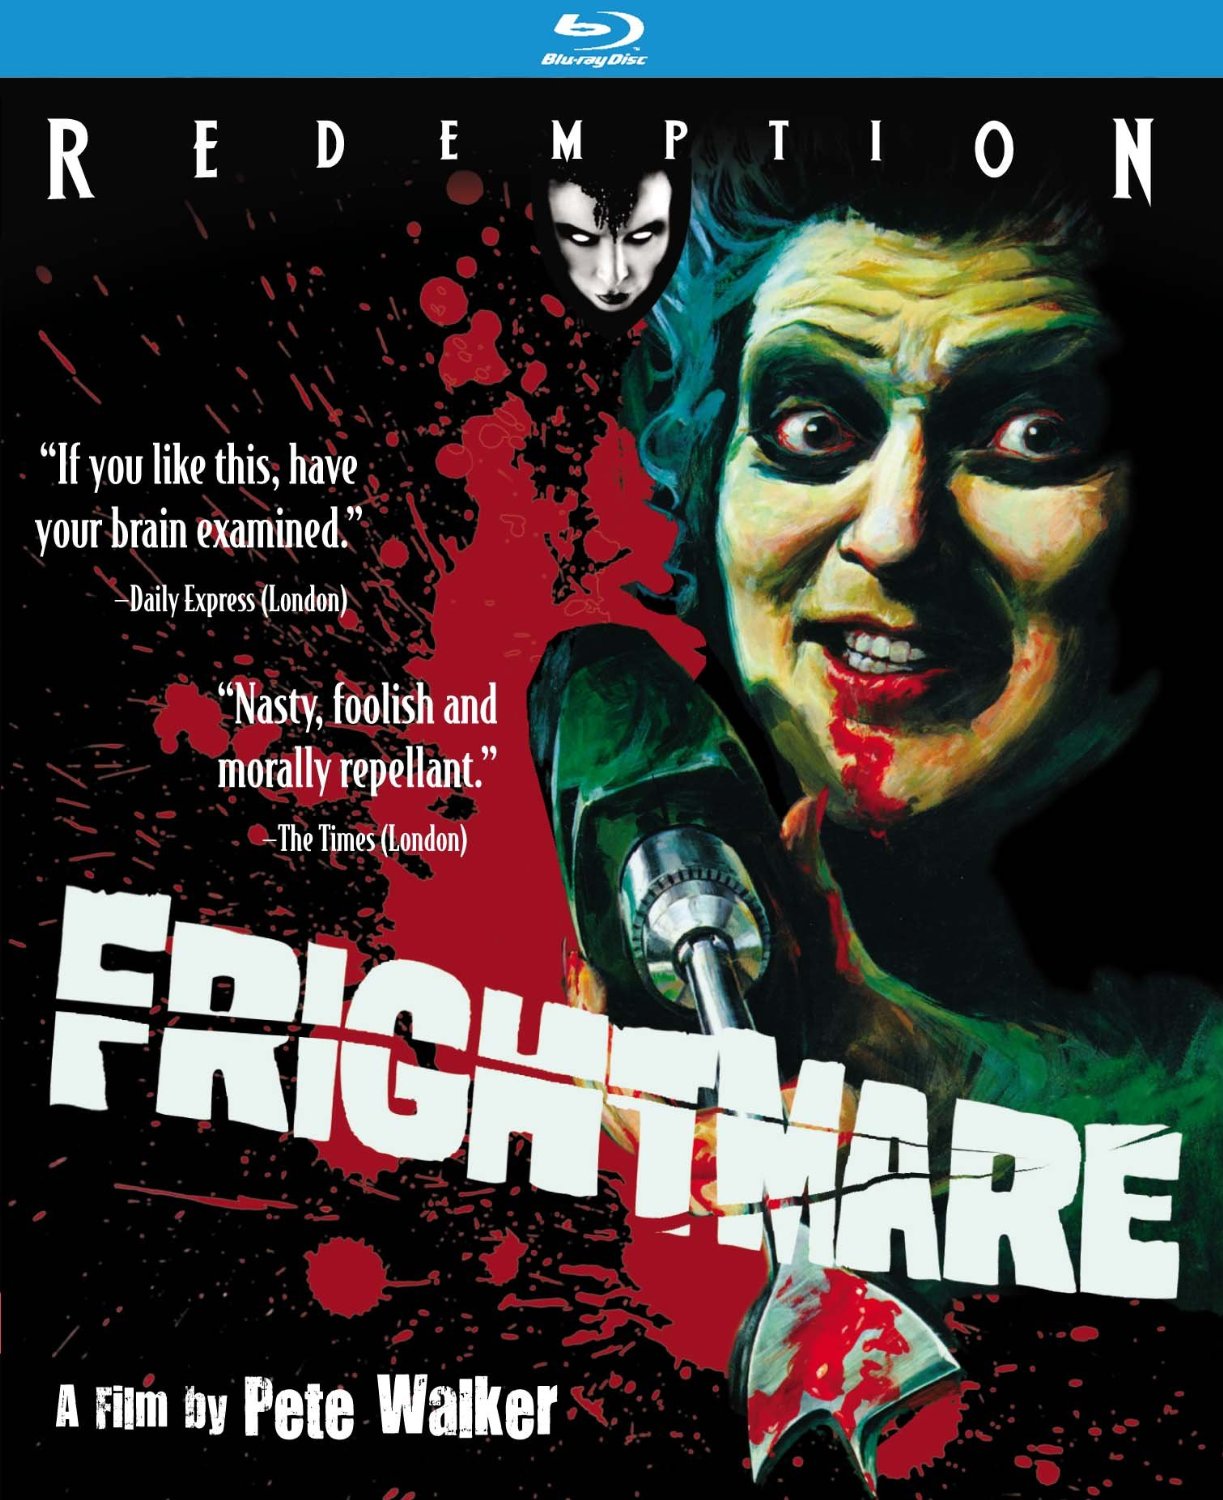 affiche du film Frightmare